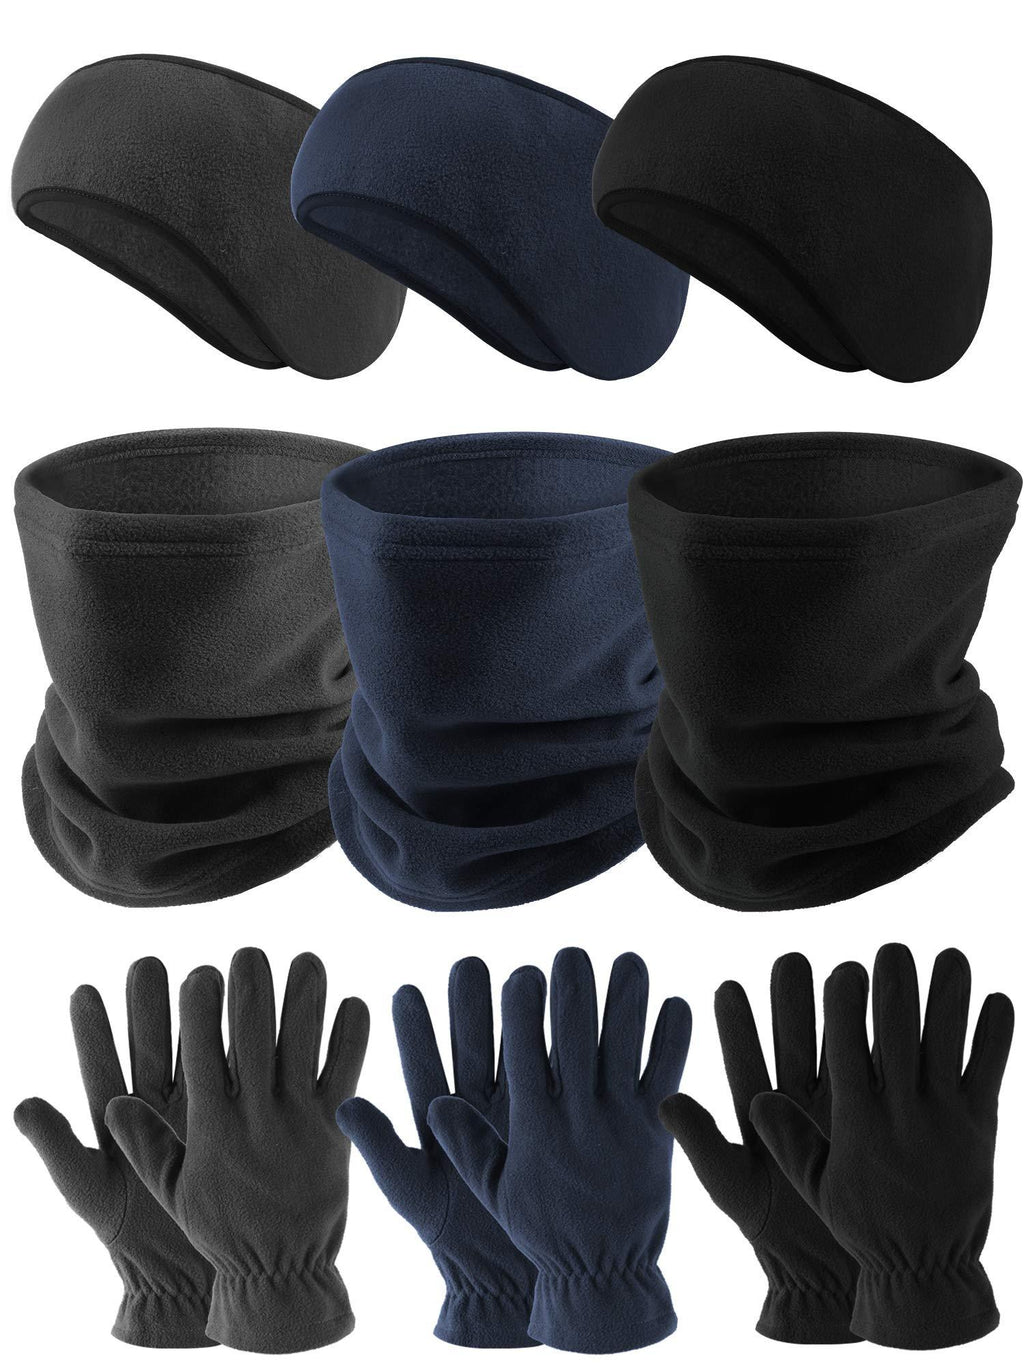 12 Pieces Ear Warmers Headband Neck Gaiter Glove Set Include Polar Fleece Neck Warmer Fleece Headbands Winter Warm Gloves for Men and Women Winter Outdoor Sports and Daily Wearing, 3 Colors - BeesActive Australia